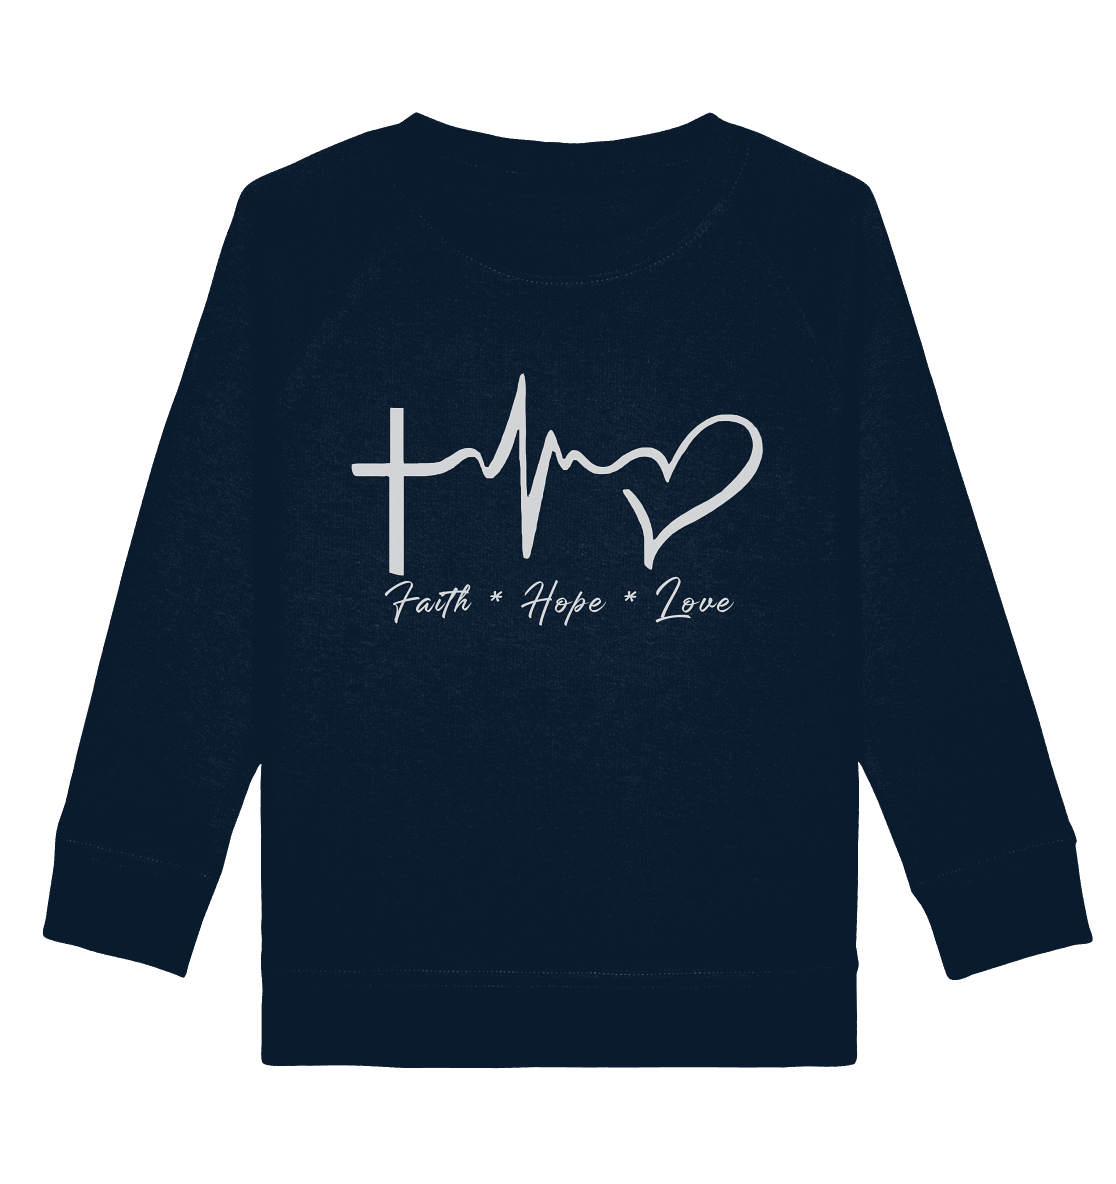 Faith * Hope * Love - Kids Organic Sweatshirt